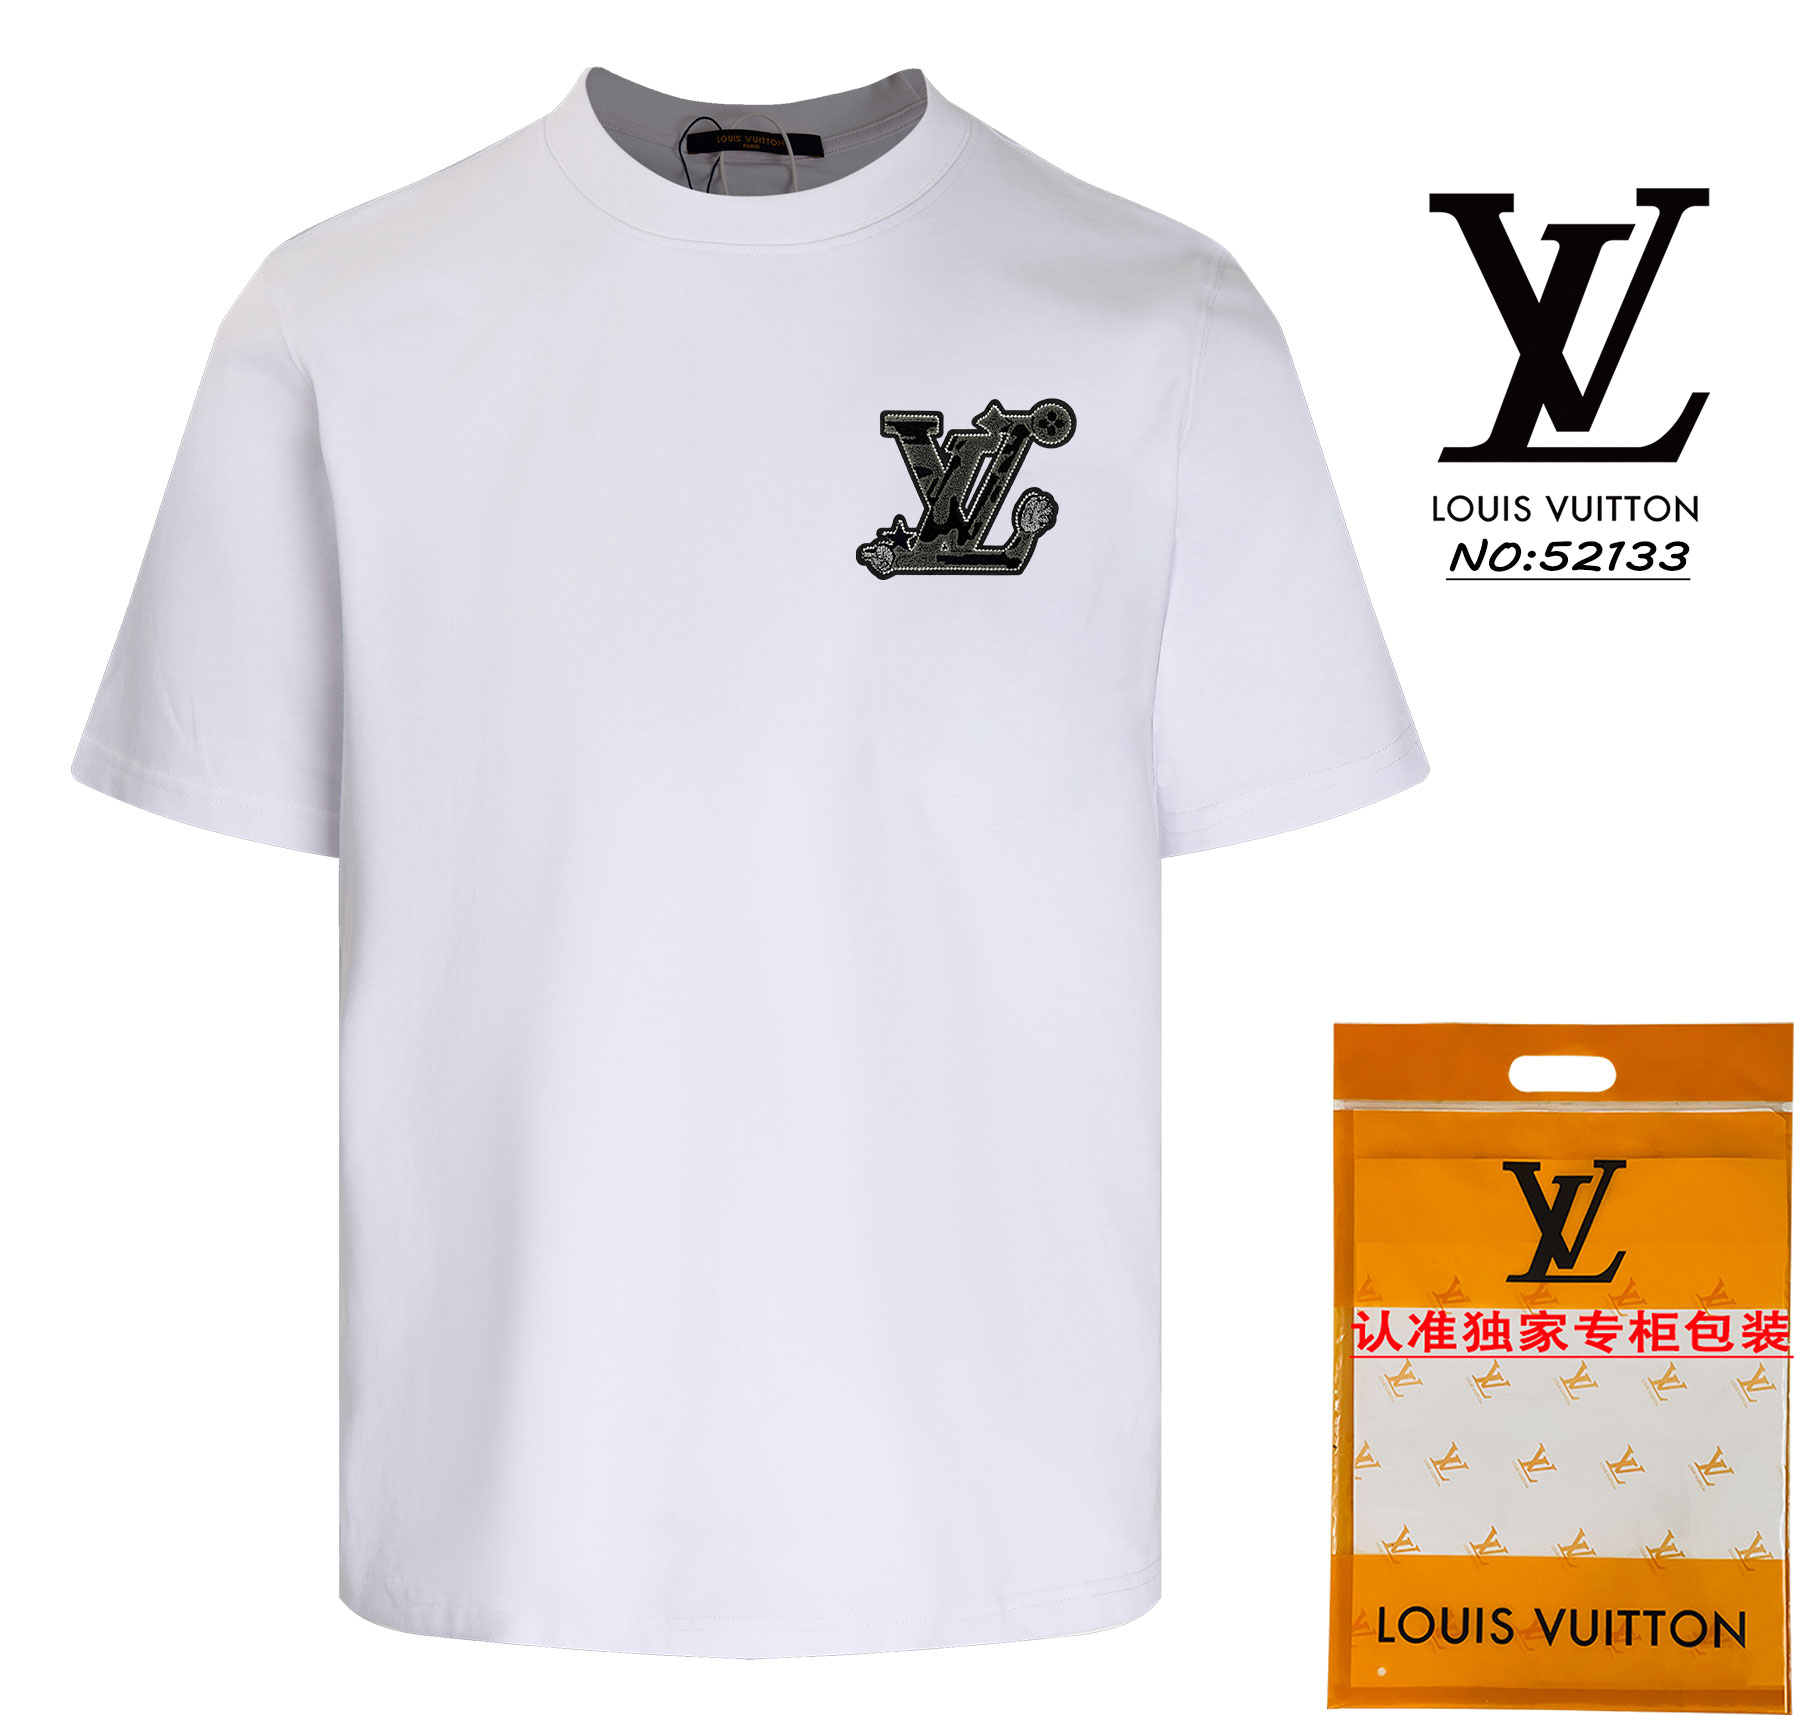 Louis Vuitton Buy Clothing T-Shirt Apricot Color Black White Unisex Short Sleeve